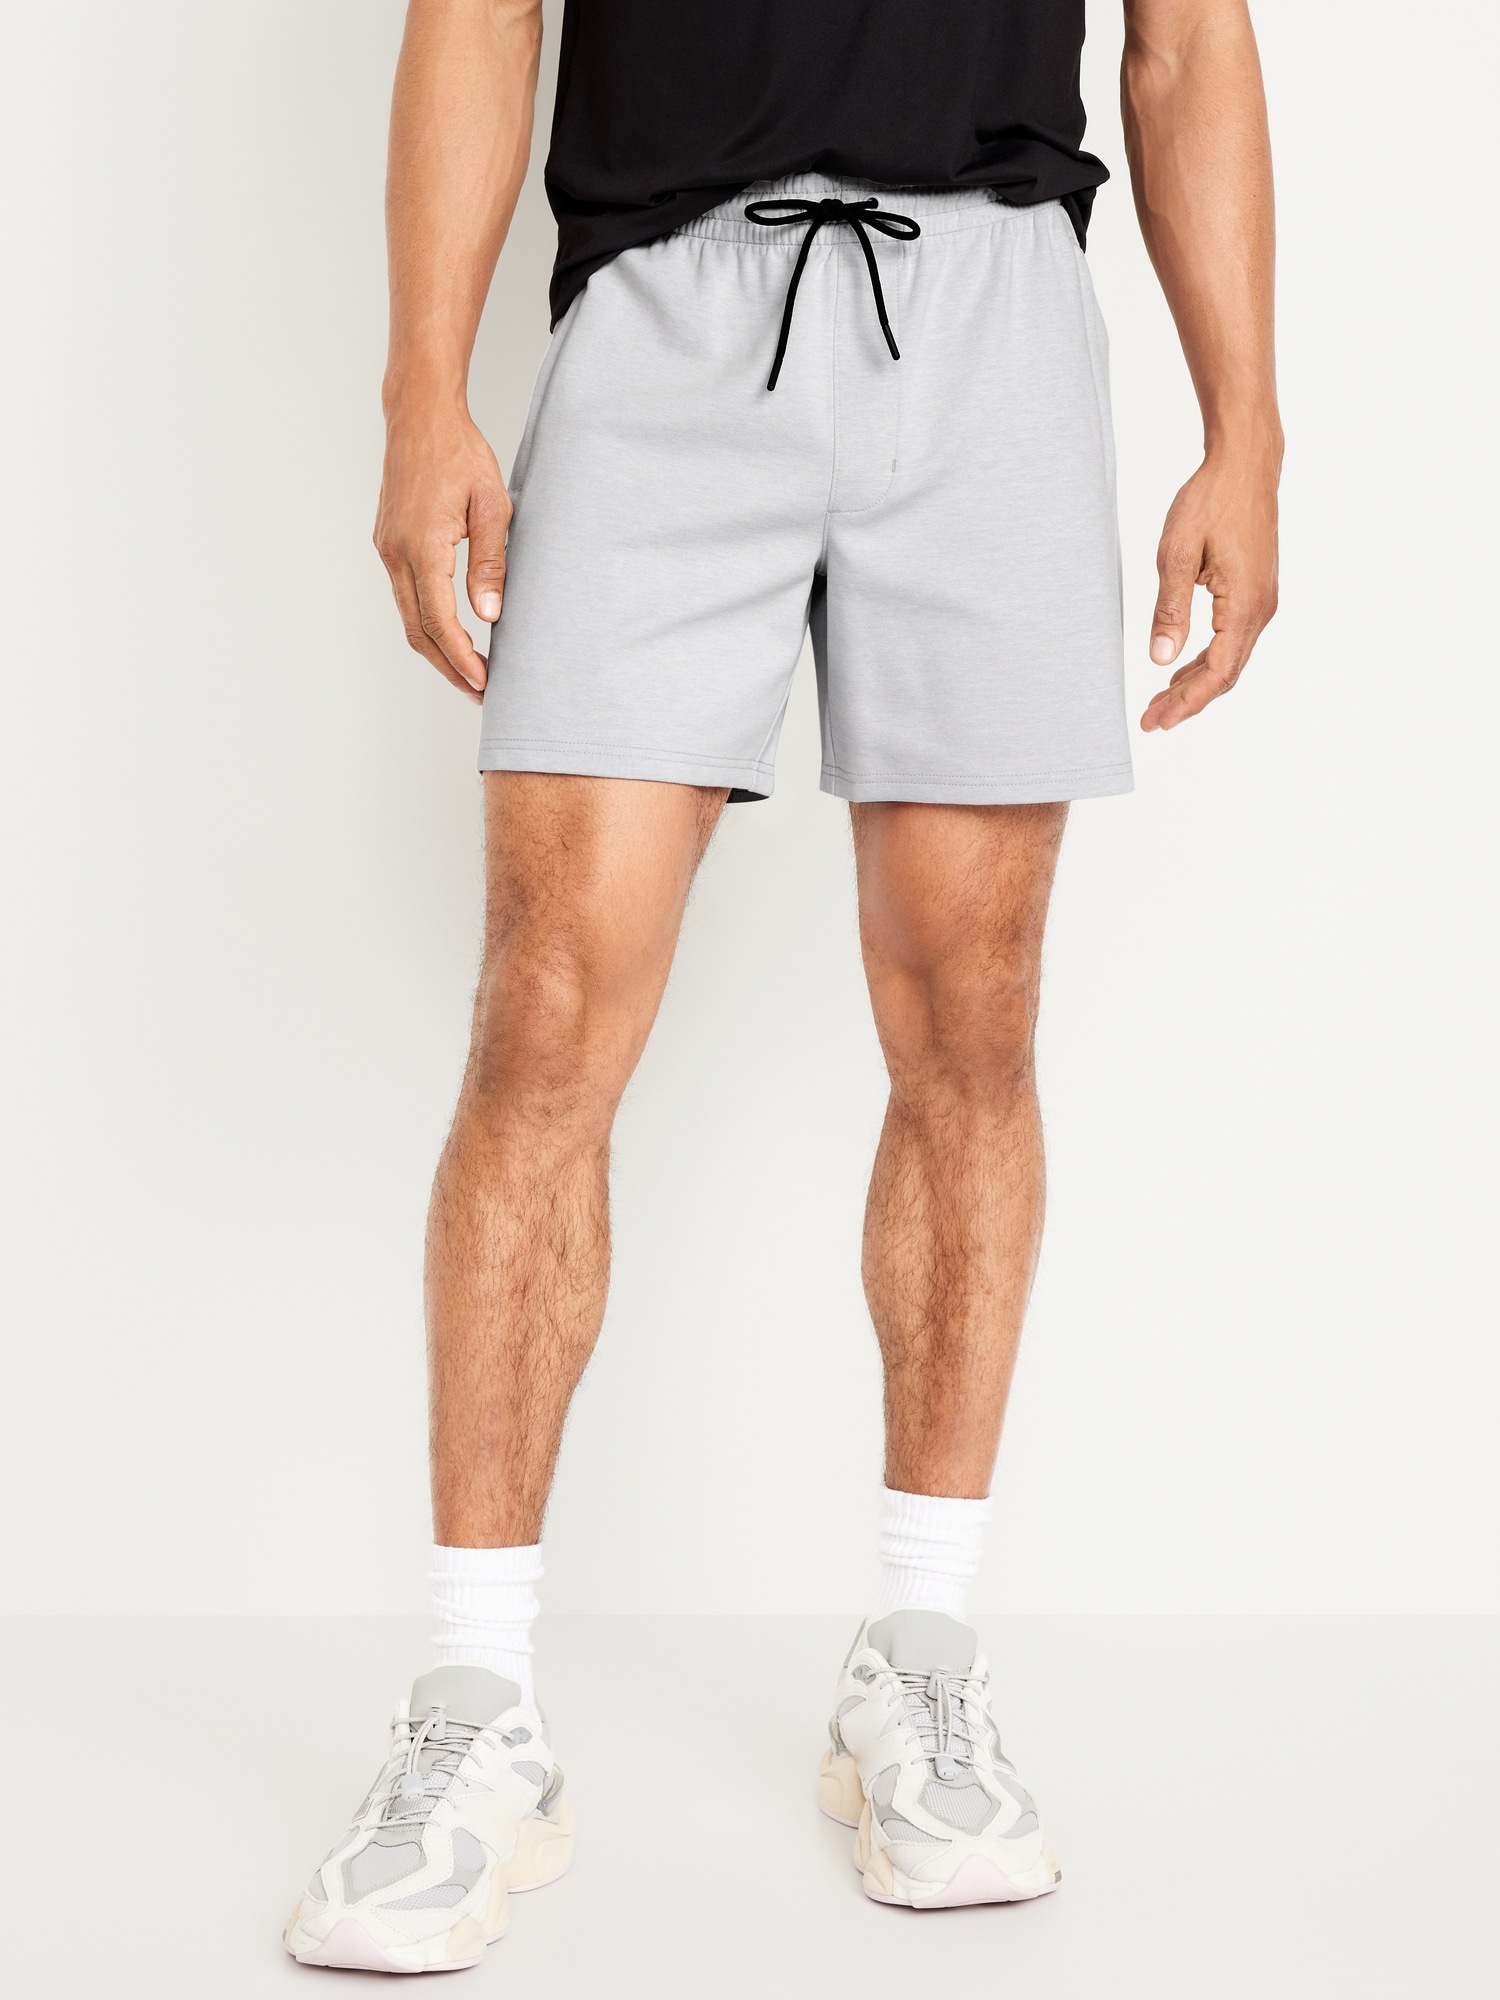 Mens Fleece Shorts